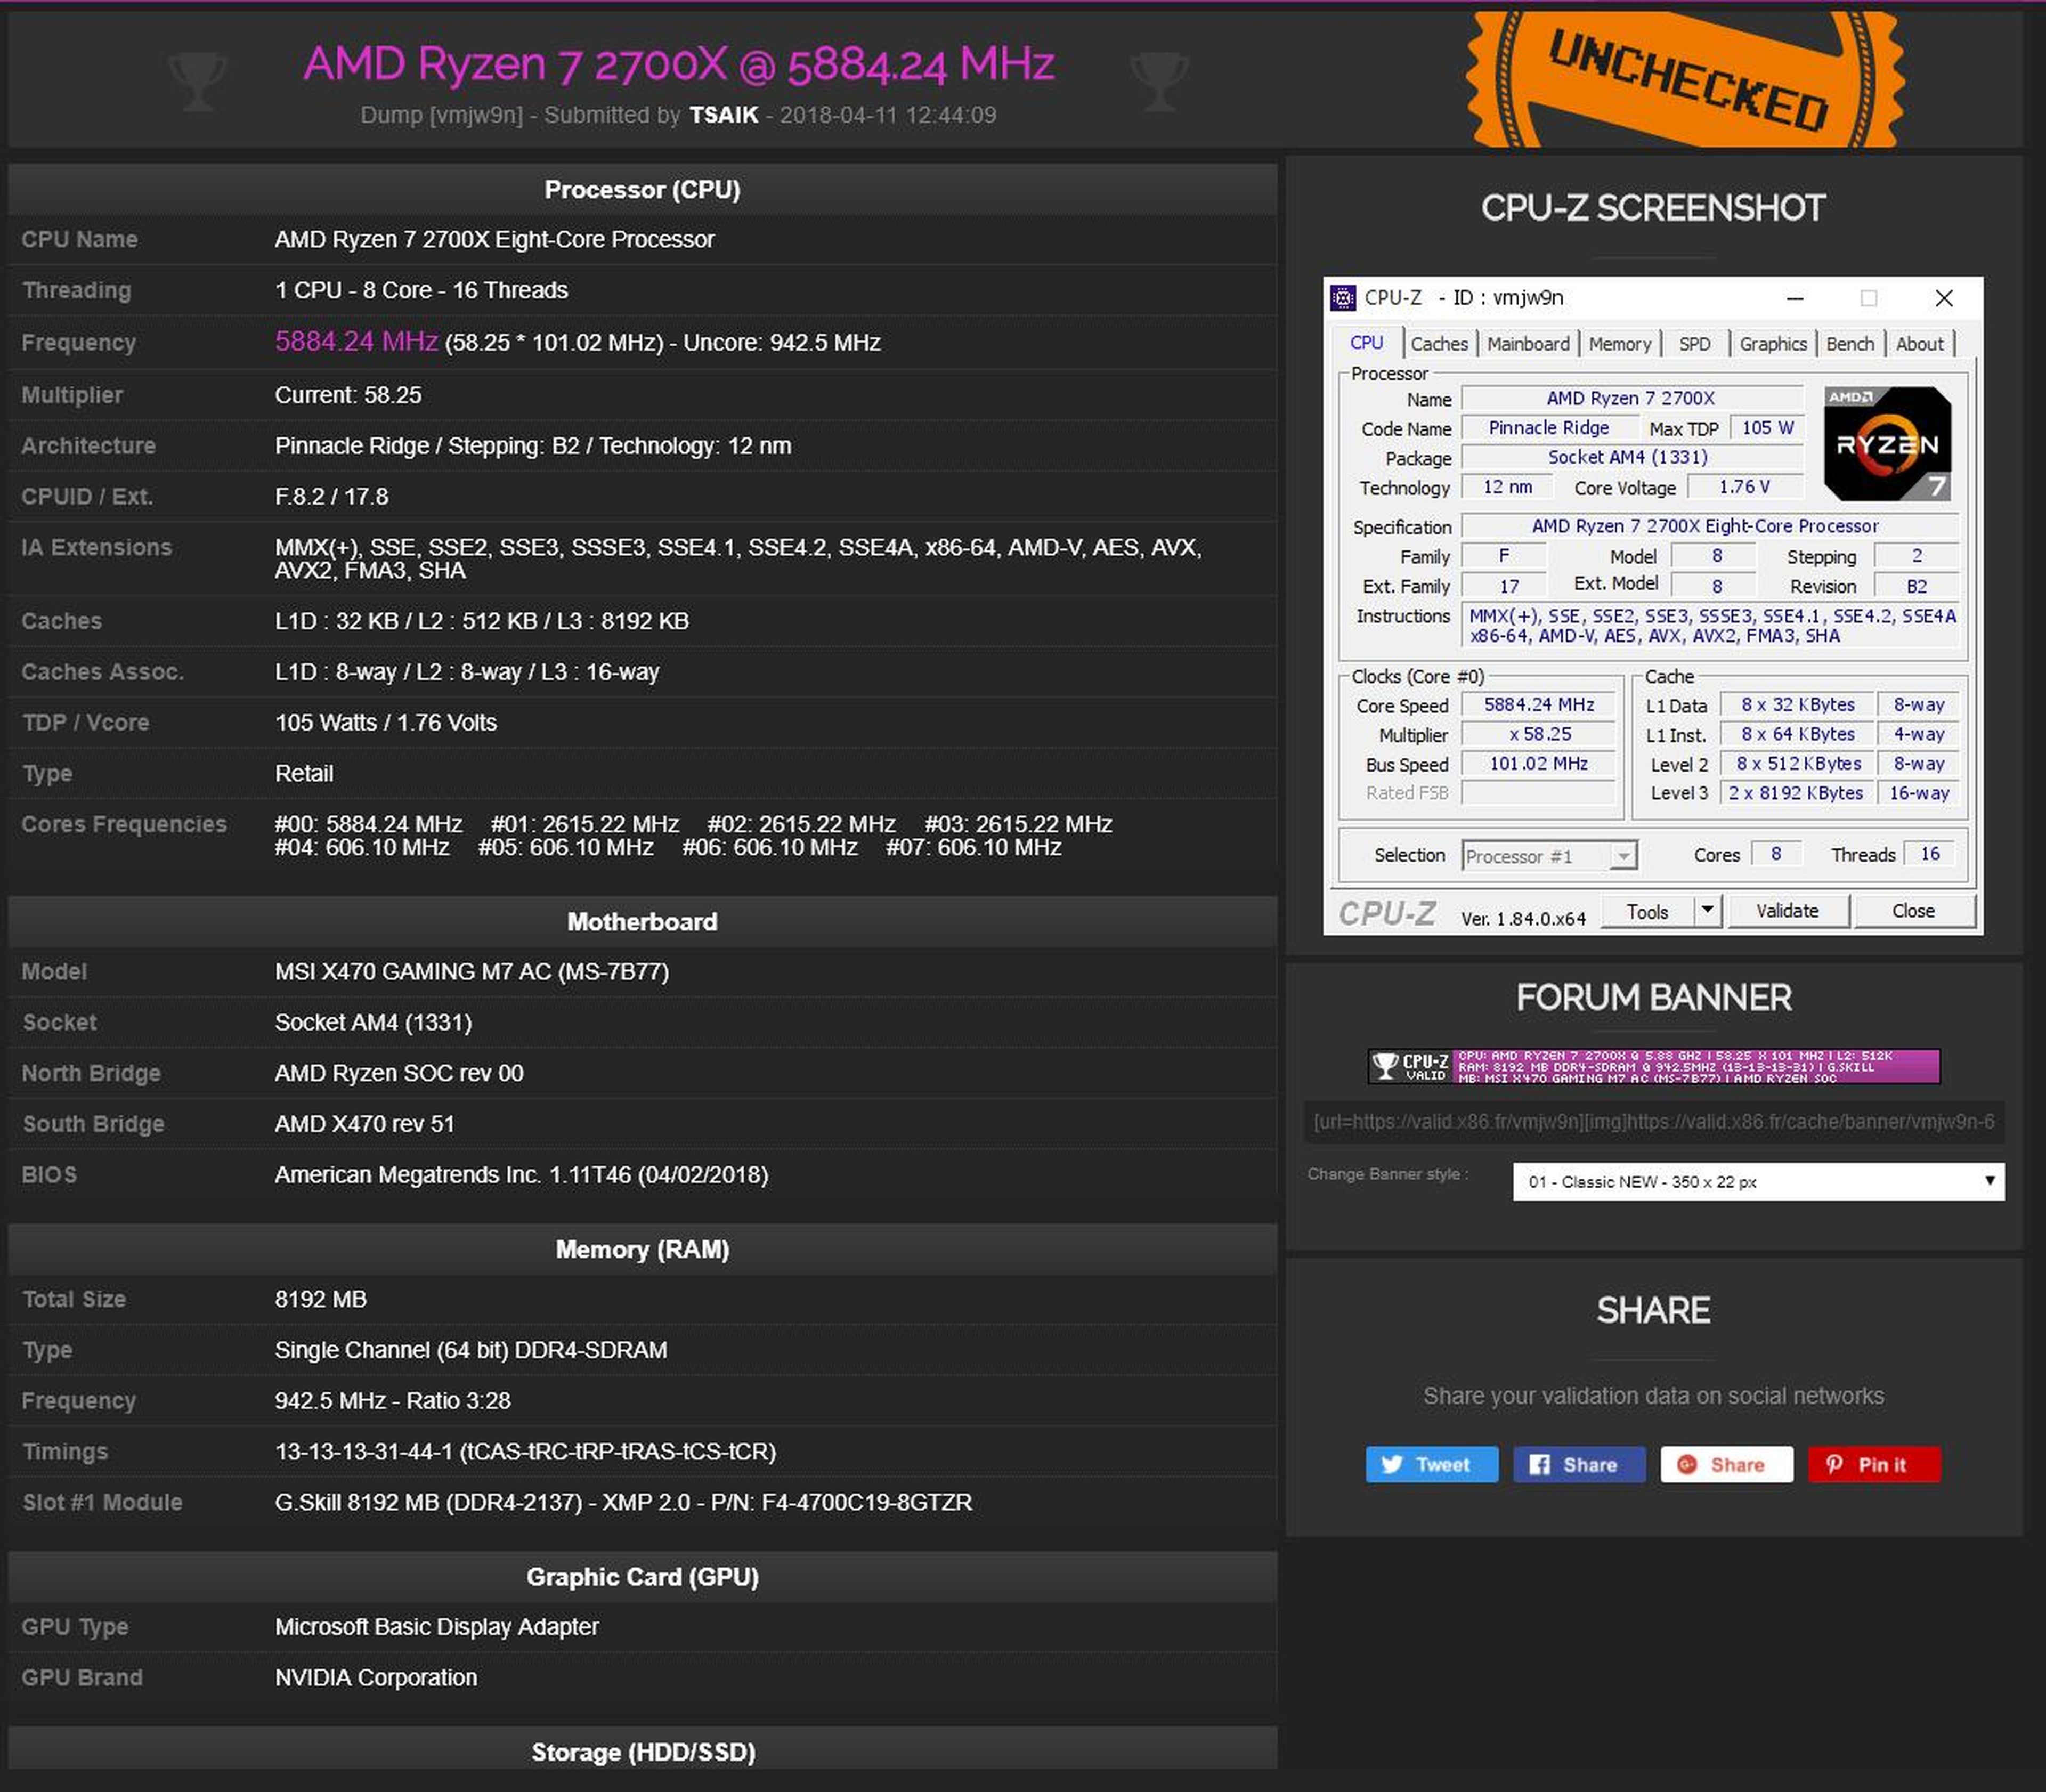 AMD Ryzen overclock